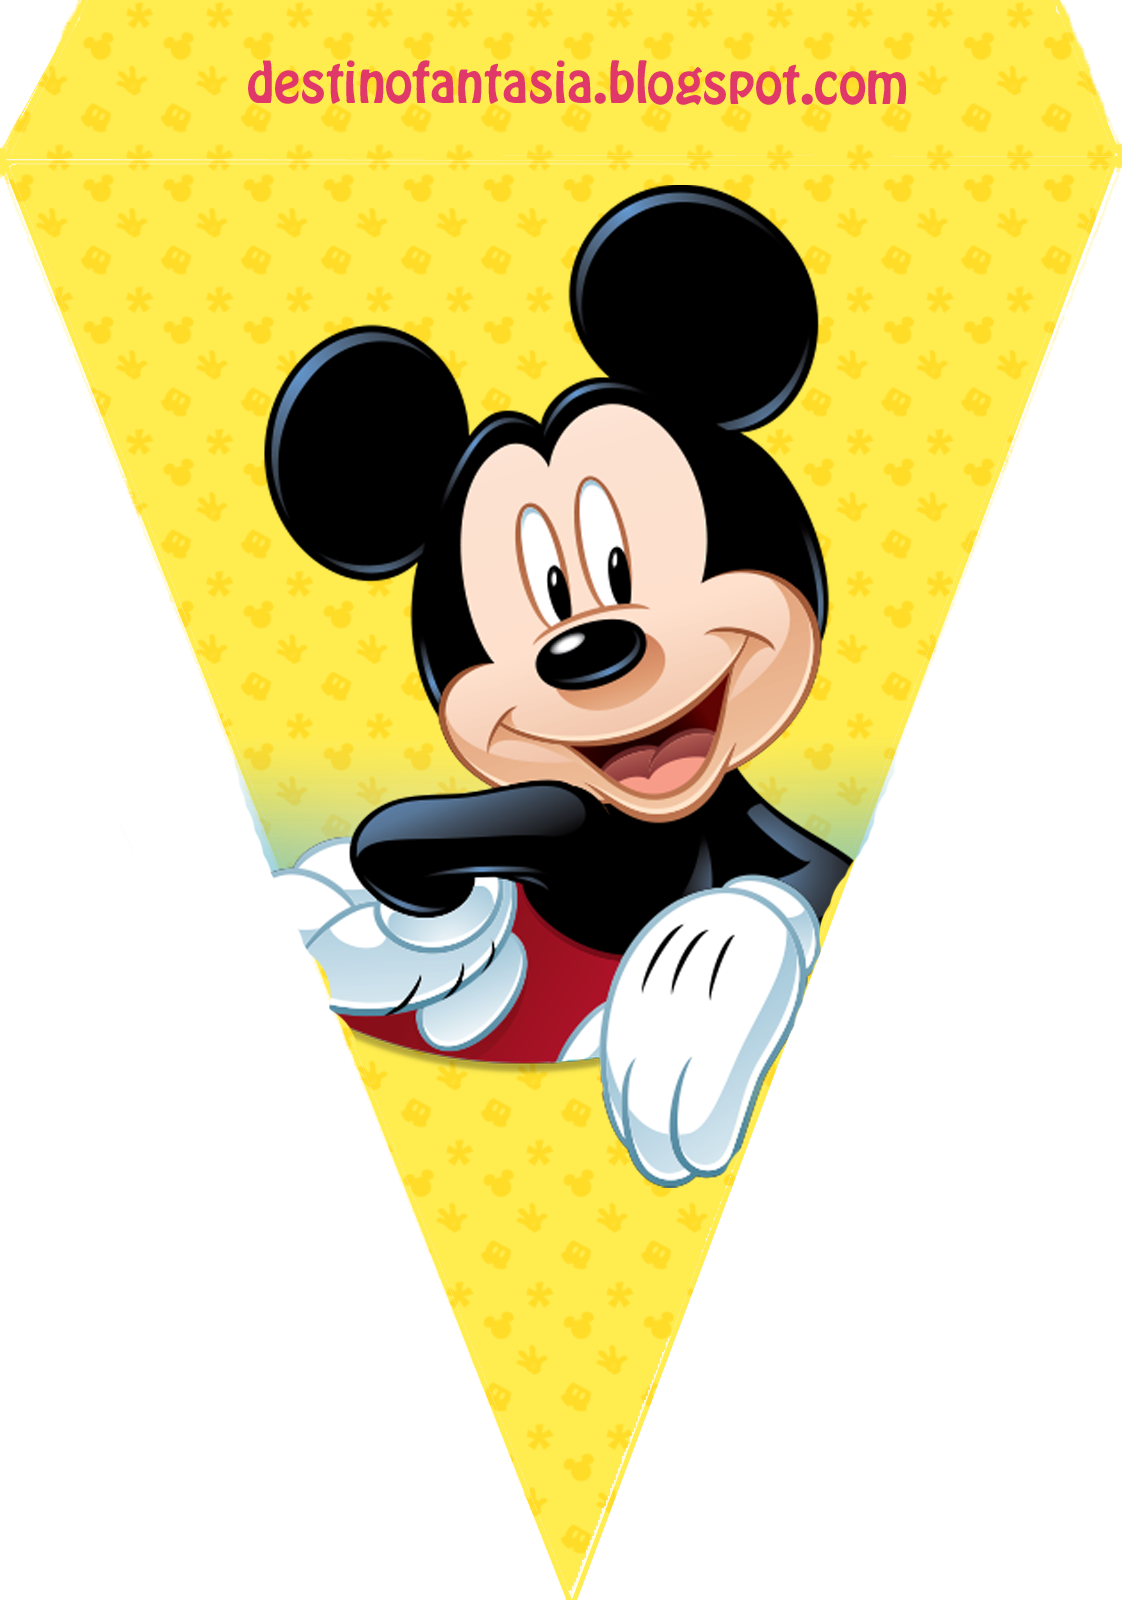 Destino Fantasia: Festa do Mickey